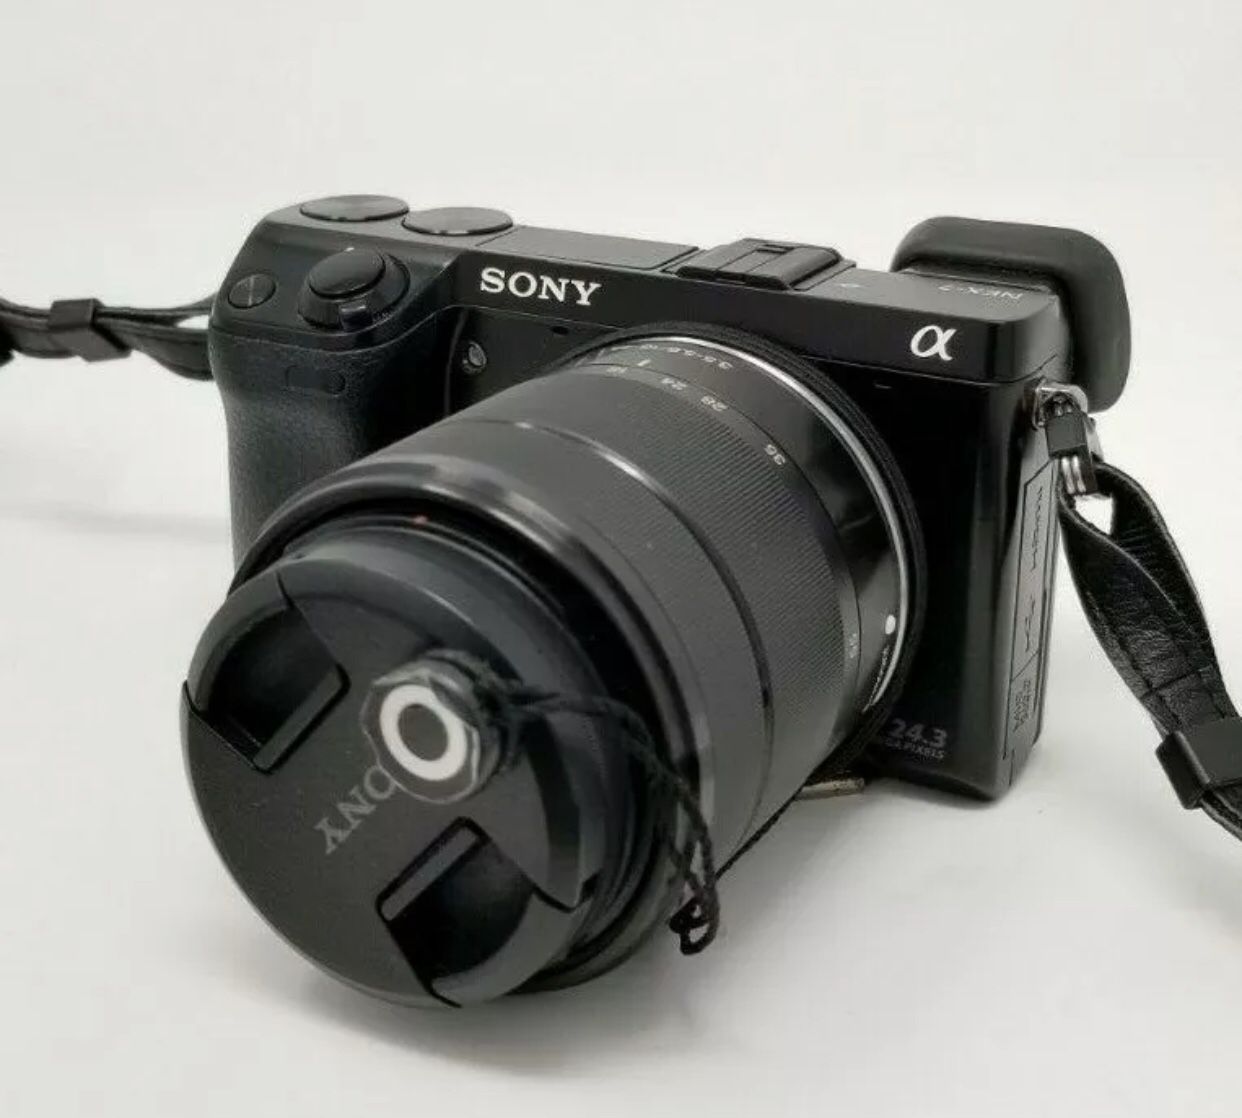 Award Winning Camera - Sony Nex 7